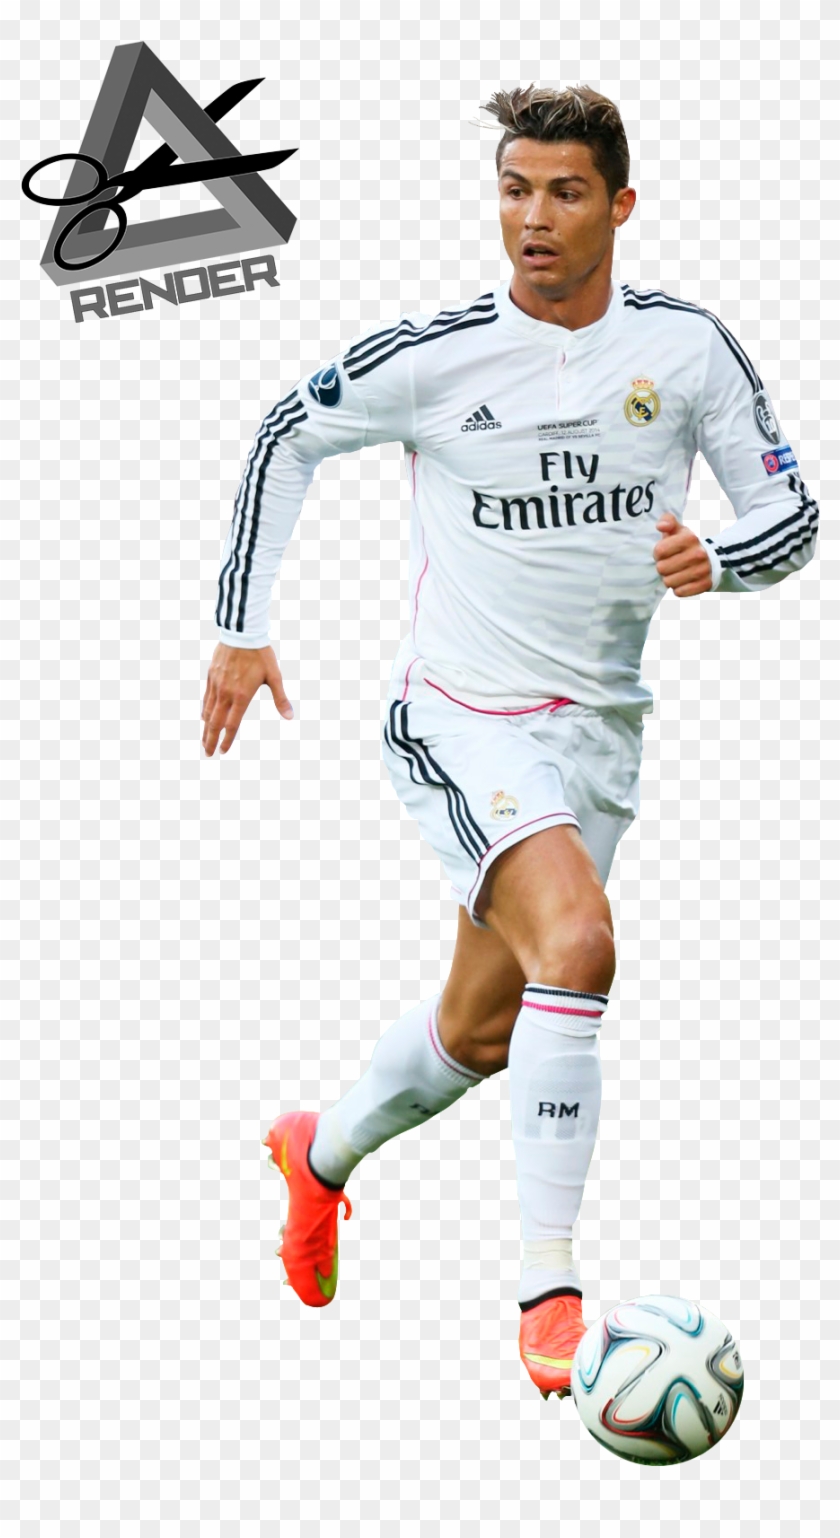 Cristiano Ronaldo Real Madrid 2015, HD Png Download - 1185x1703 ...